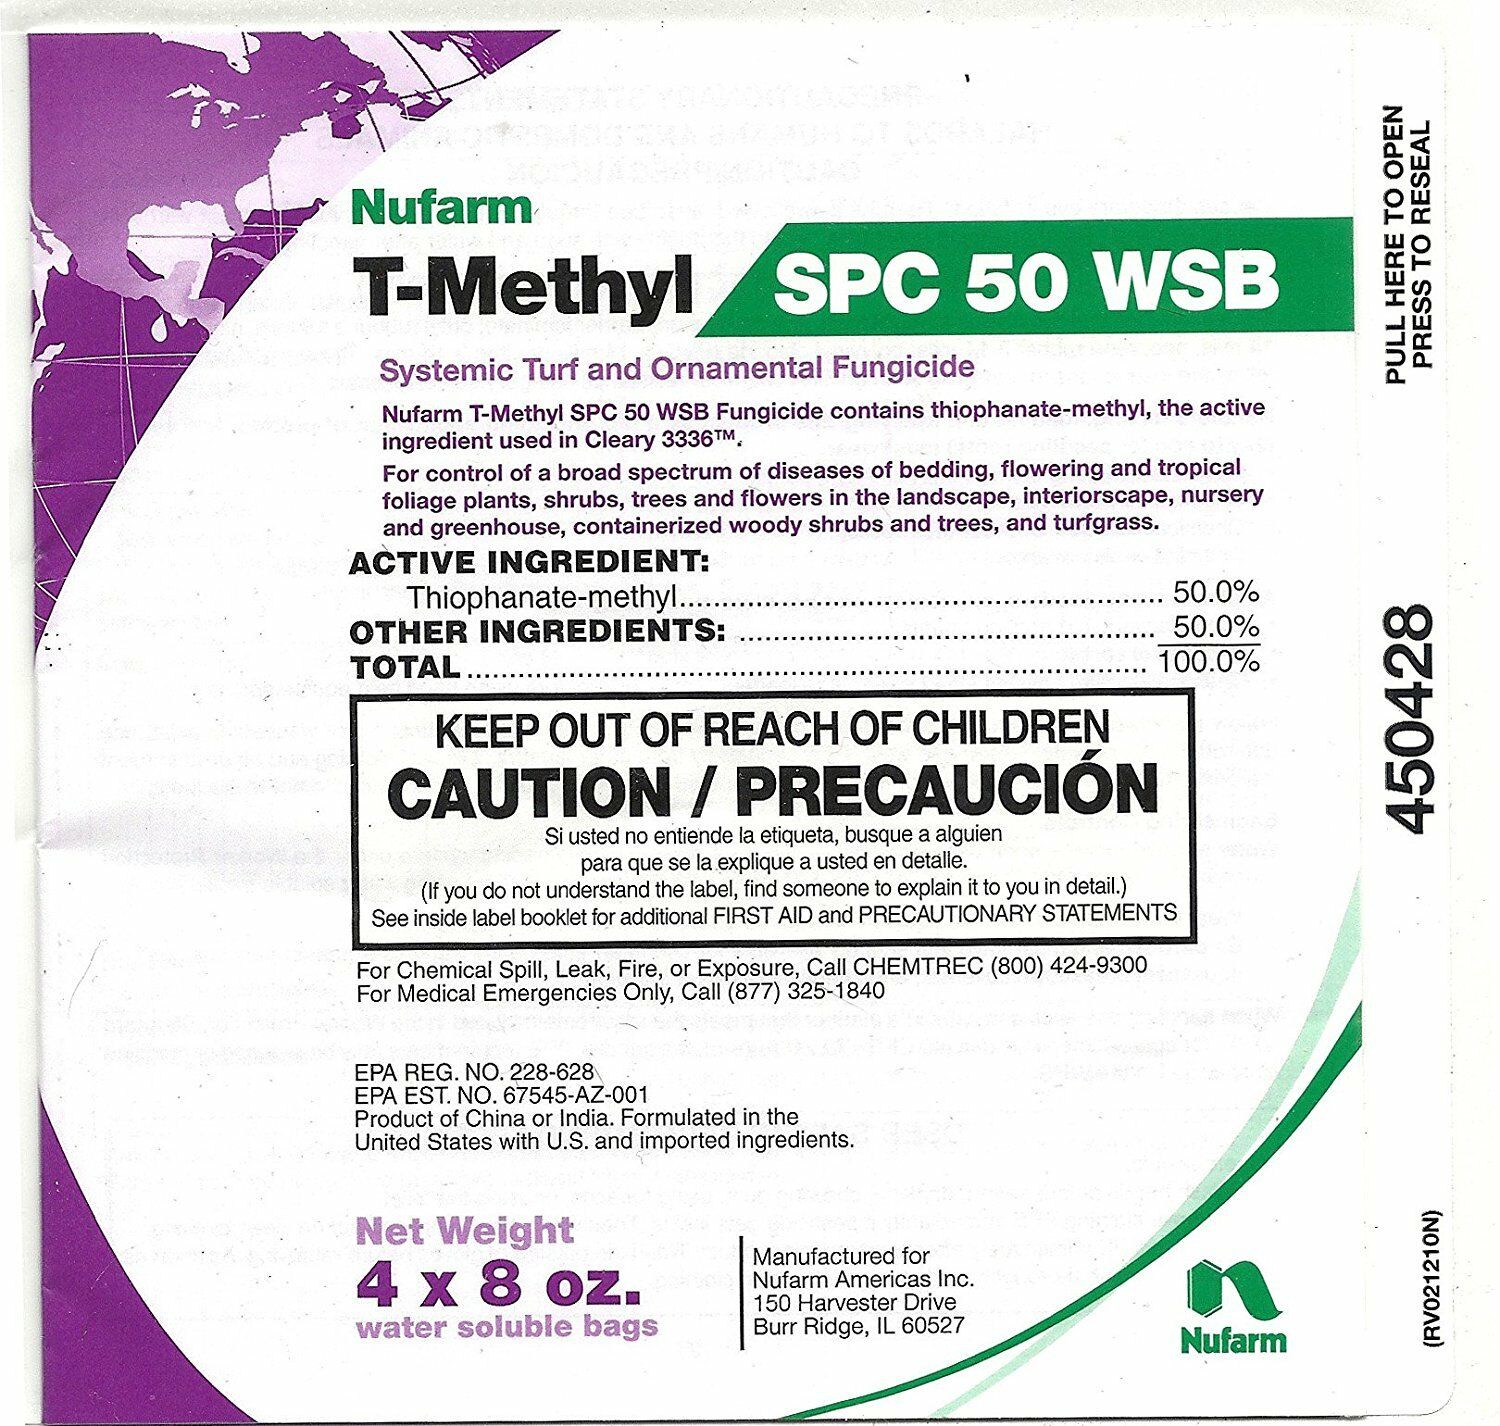 T-Methyl E-Pro 50 WSB (4 x 8oz) 2 lb bag 6/cs - Chemicals